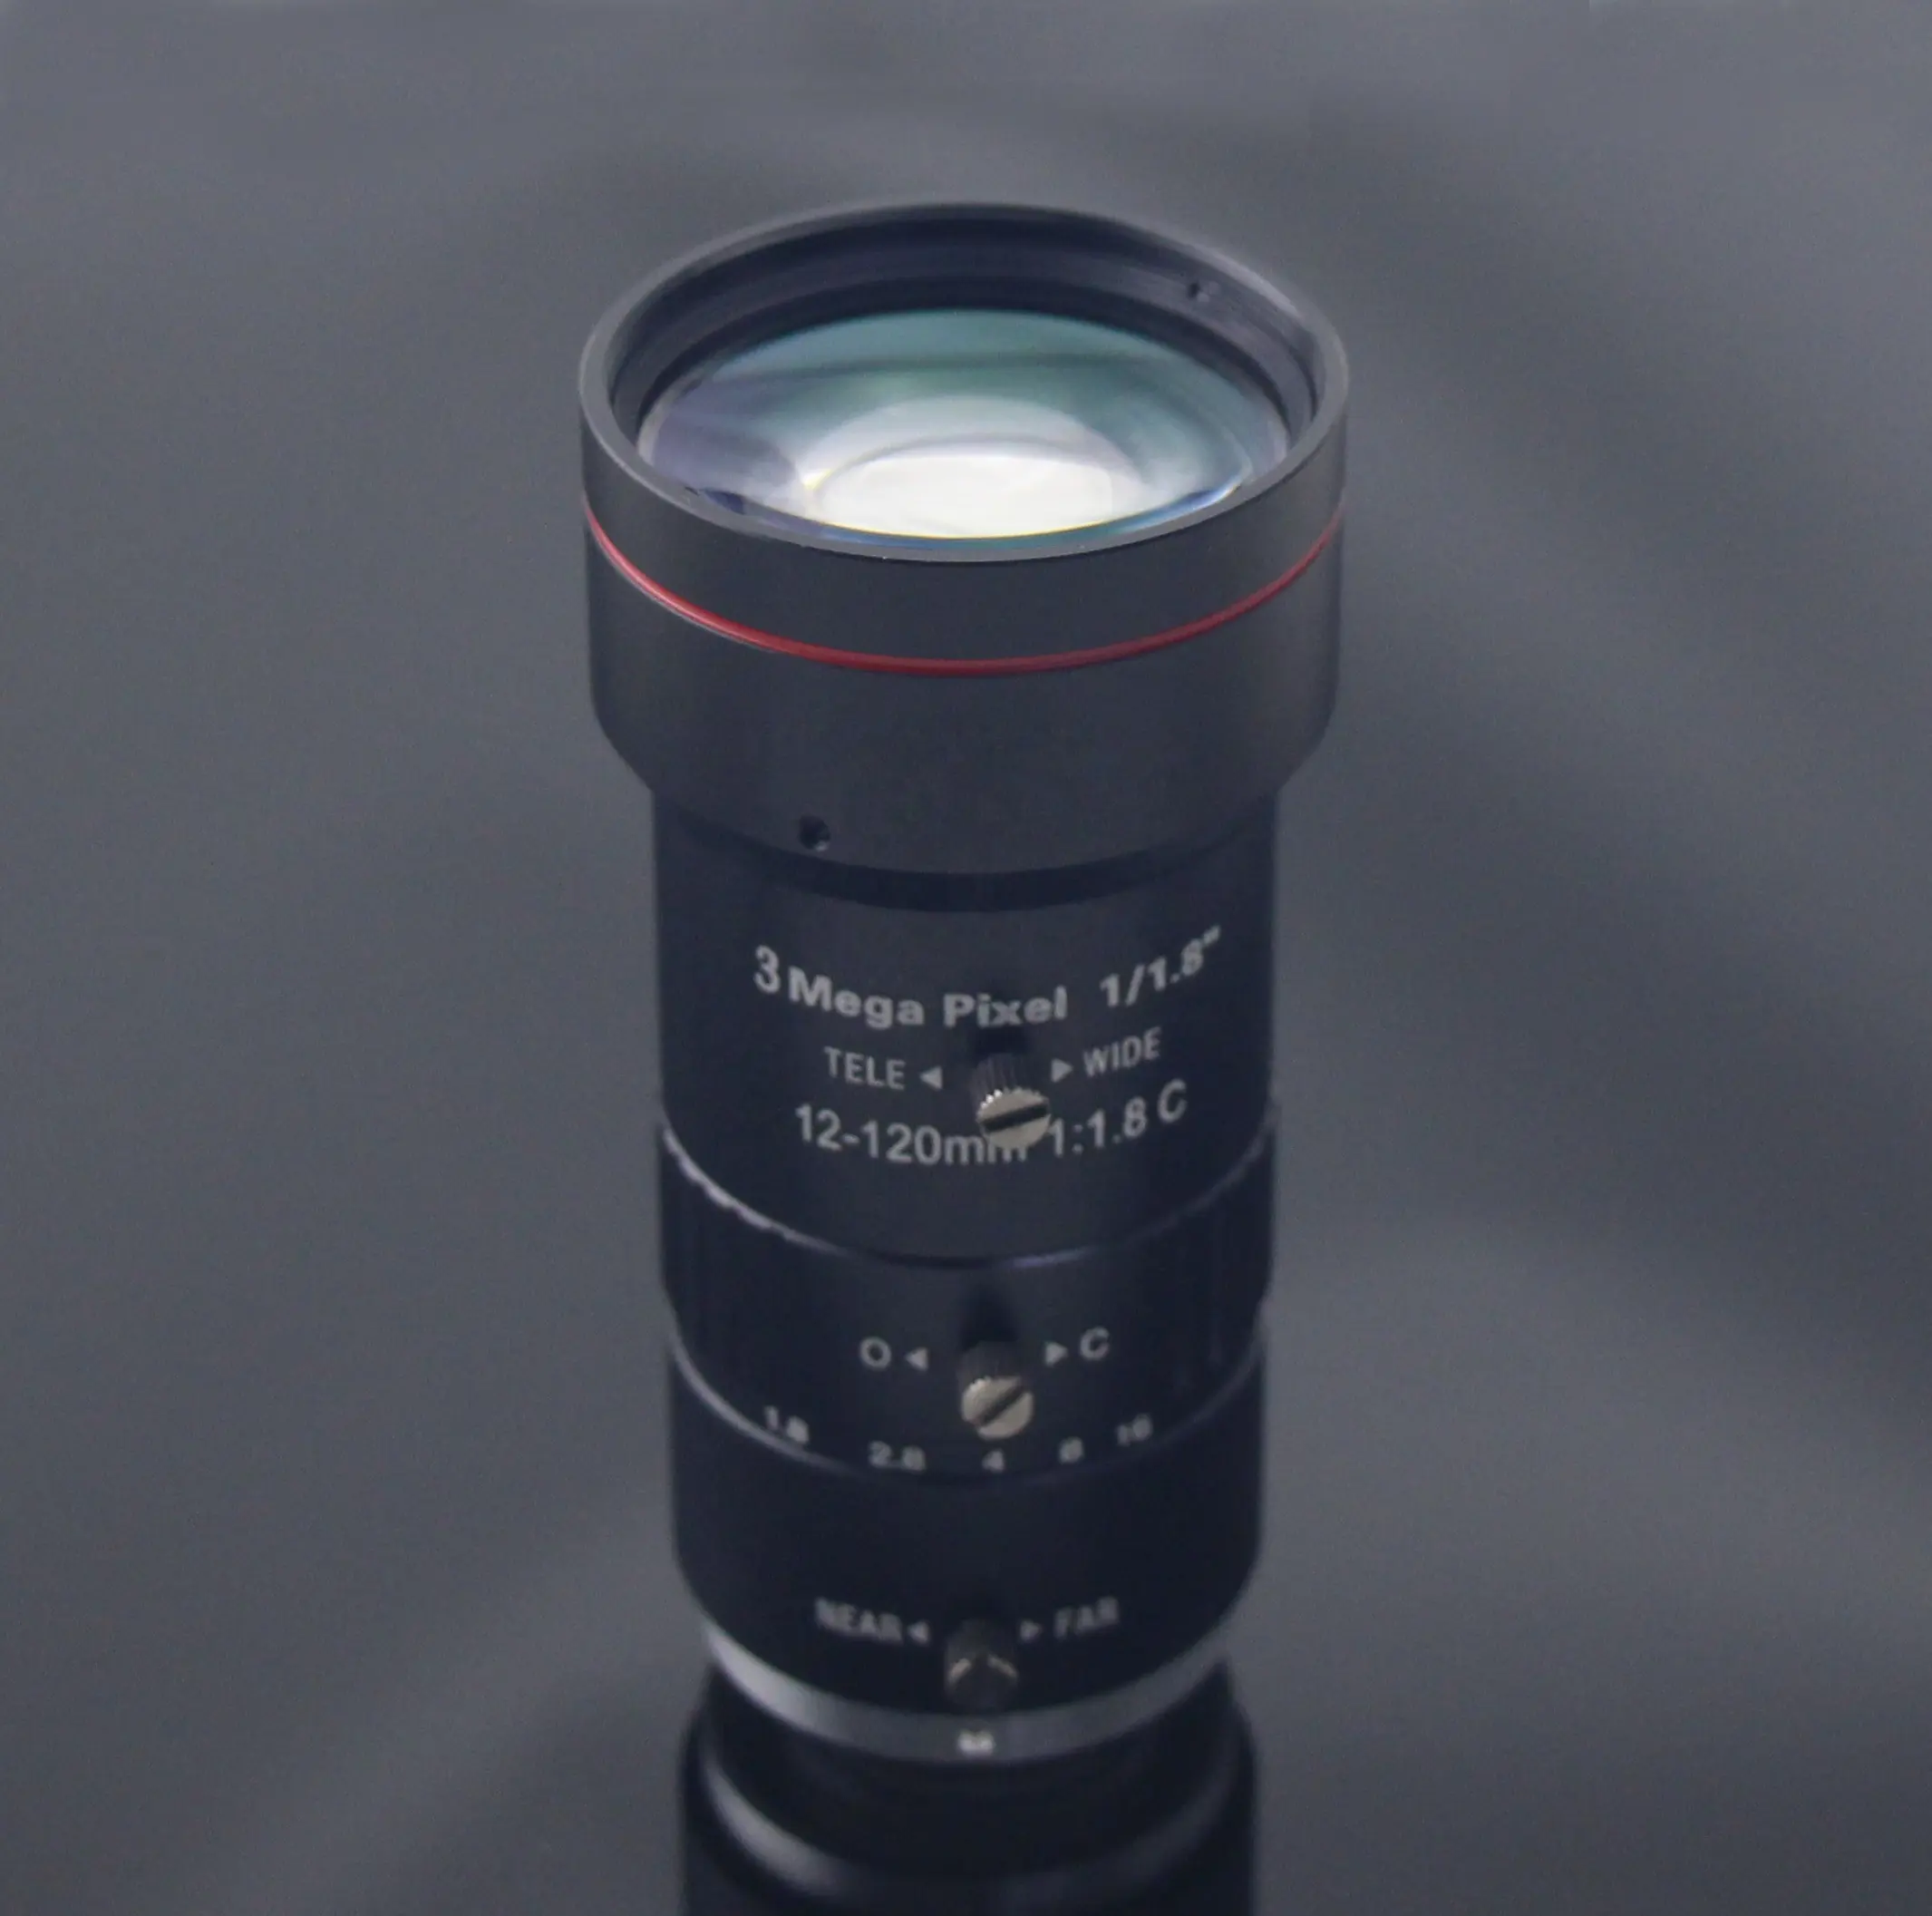 1/1.8" C Mount 10X Zoom Manual Iris Lens 12-120mm